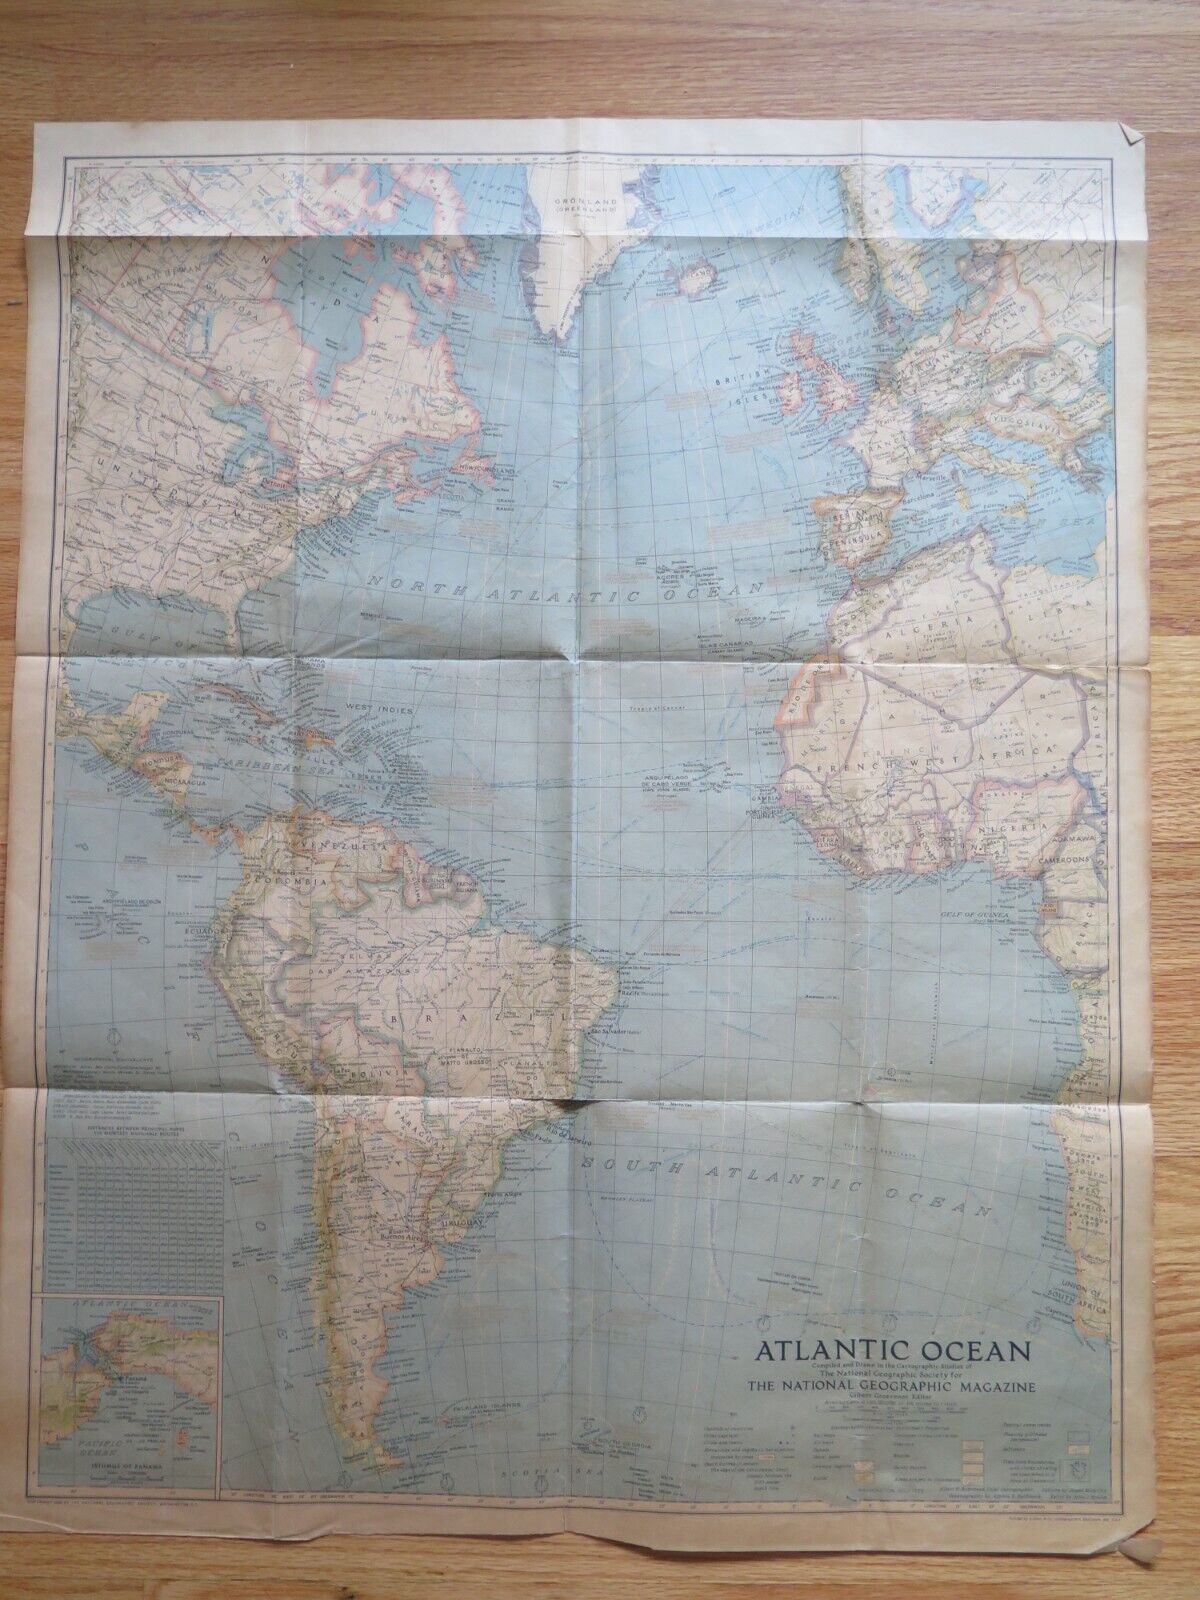 Vintage original 1939 National Geographic map - Atlantic Ocean